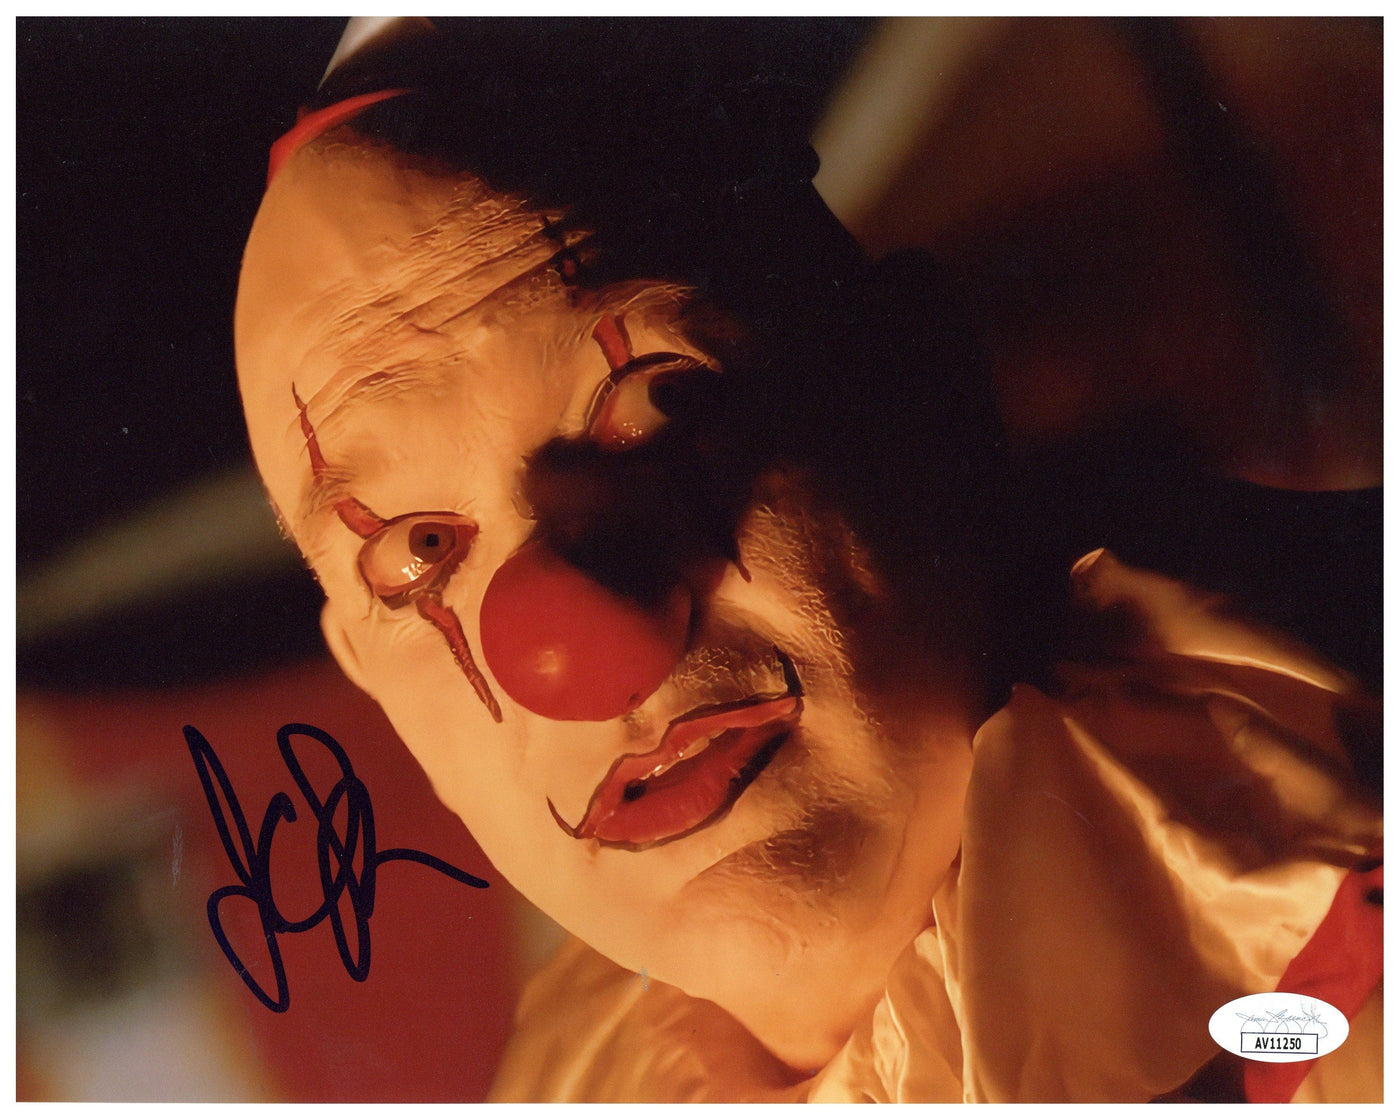 John Carroll Lynch Signed 8x10 Photo American Horror Story Freak Show Autographed JSA COA